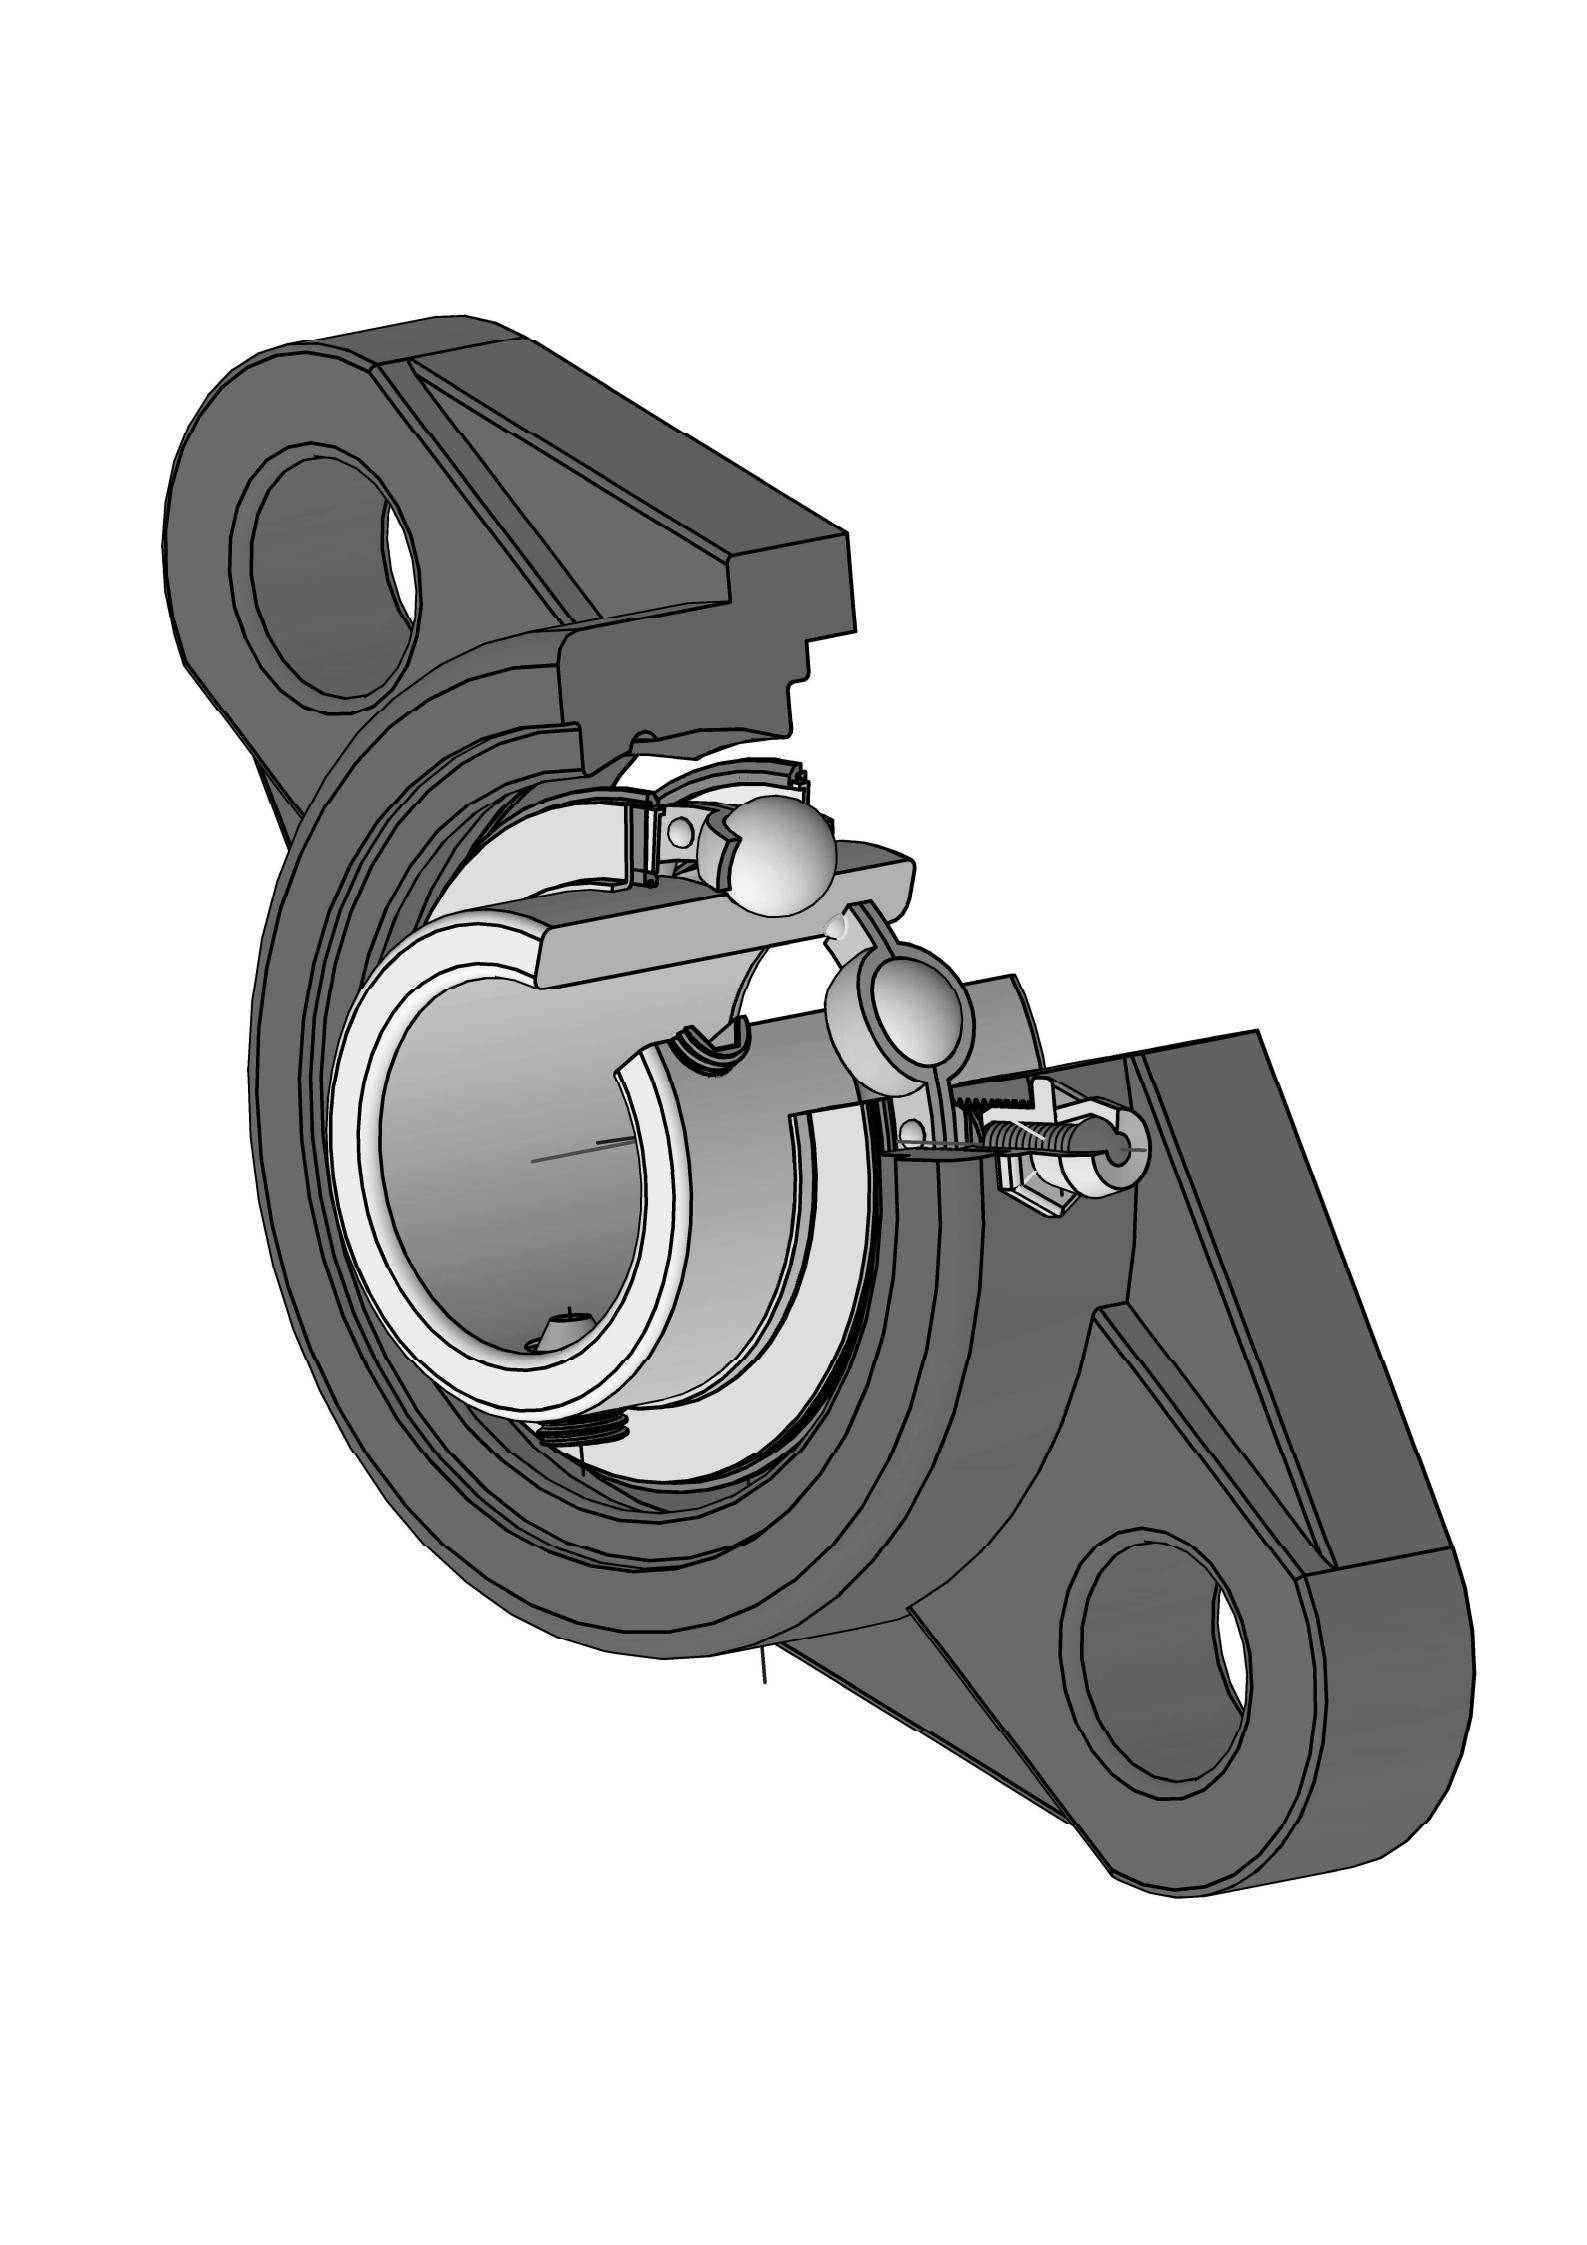 UCFT208-24 Duha ka Bolt Oval Flange bearing Units nga adunay 1-1 / 2 pulgada nga bore